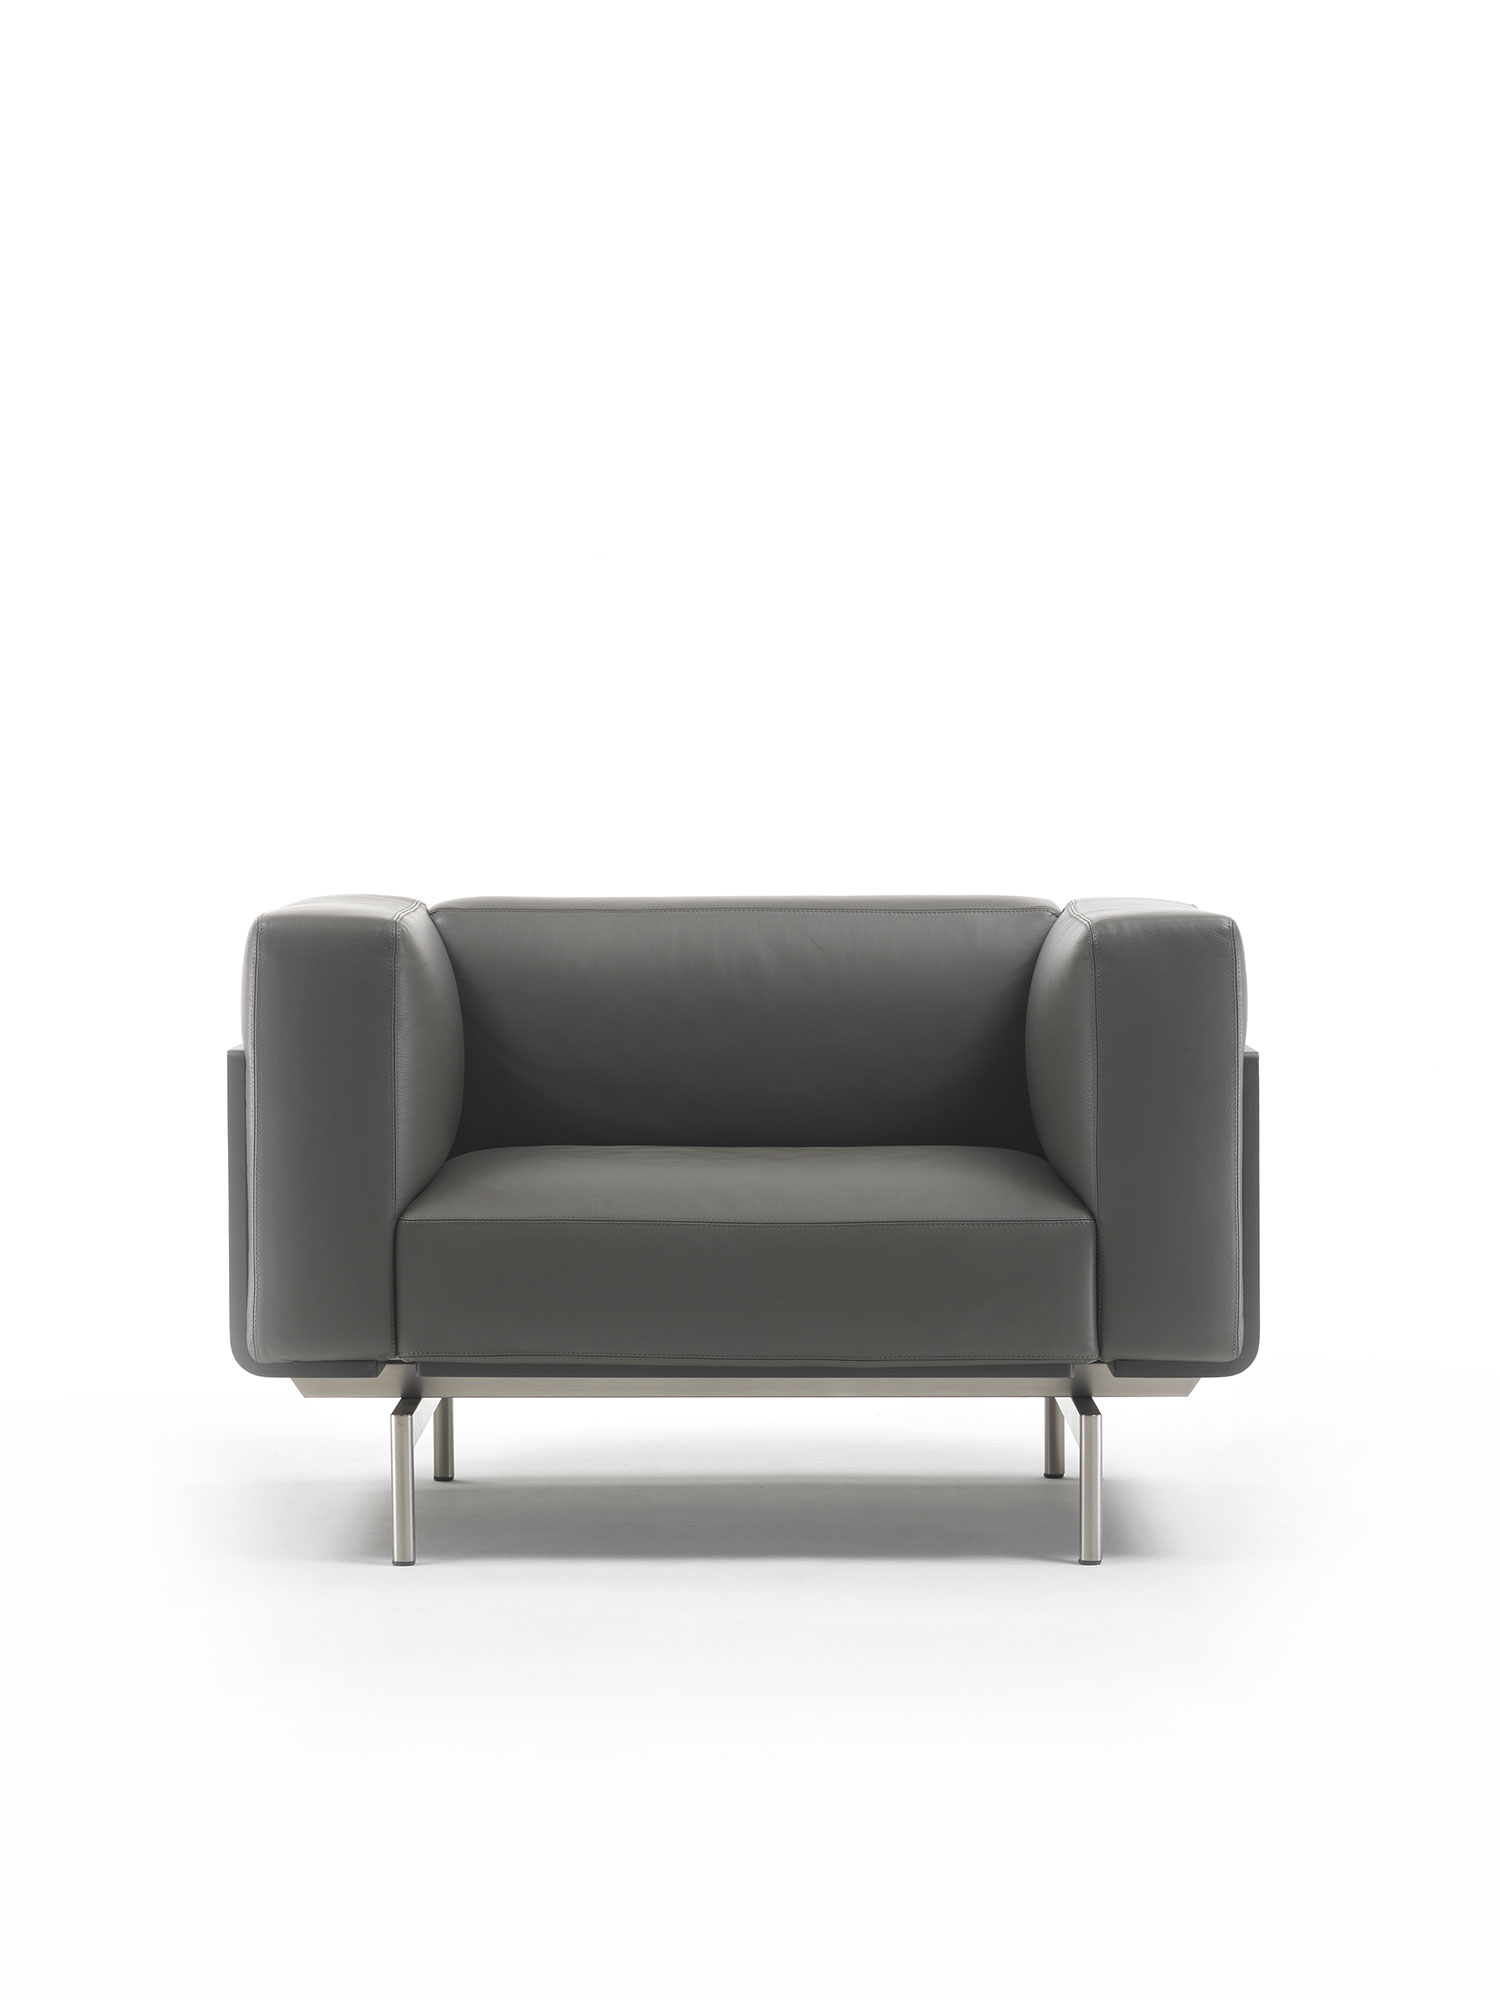 Img001 L Sofa Armchair 112x78